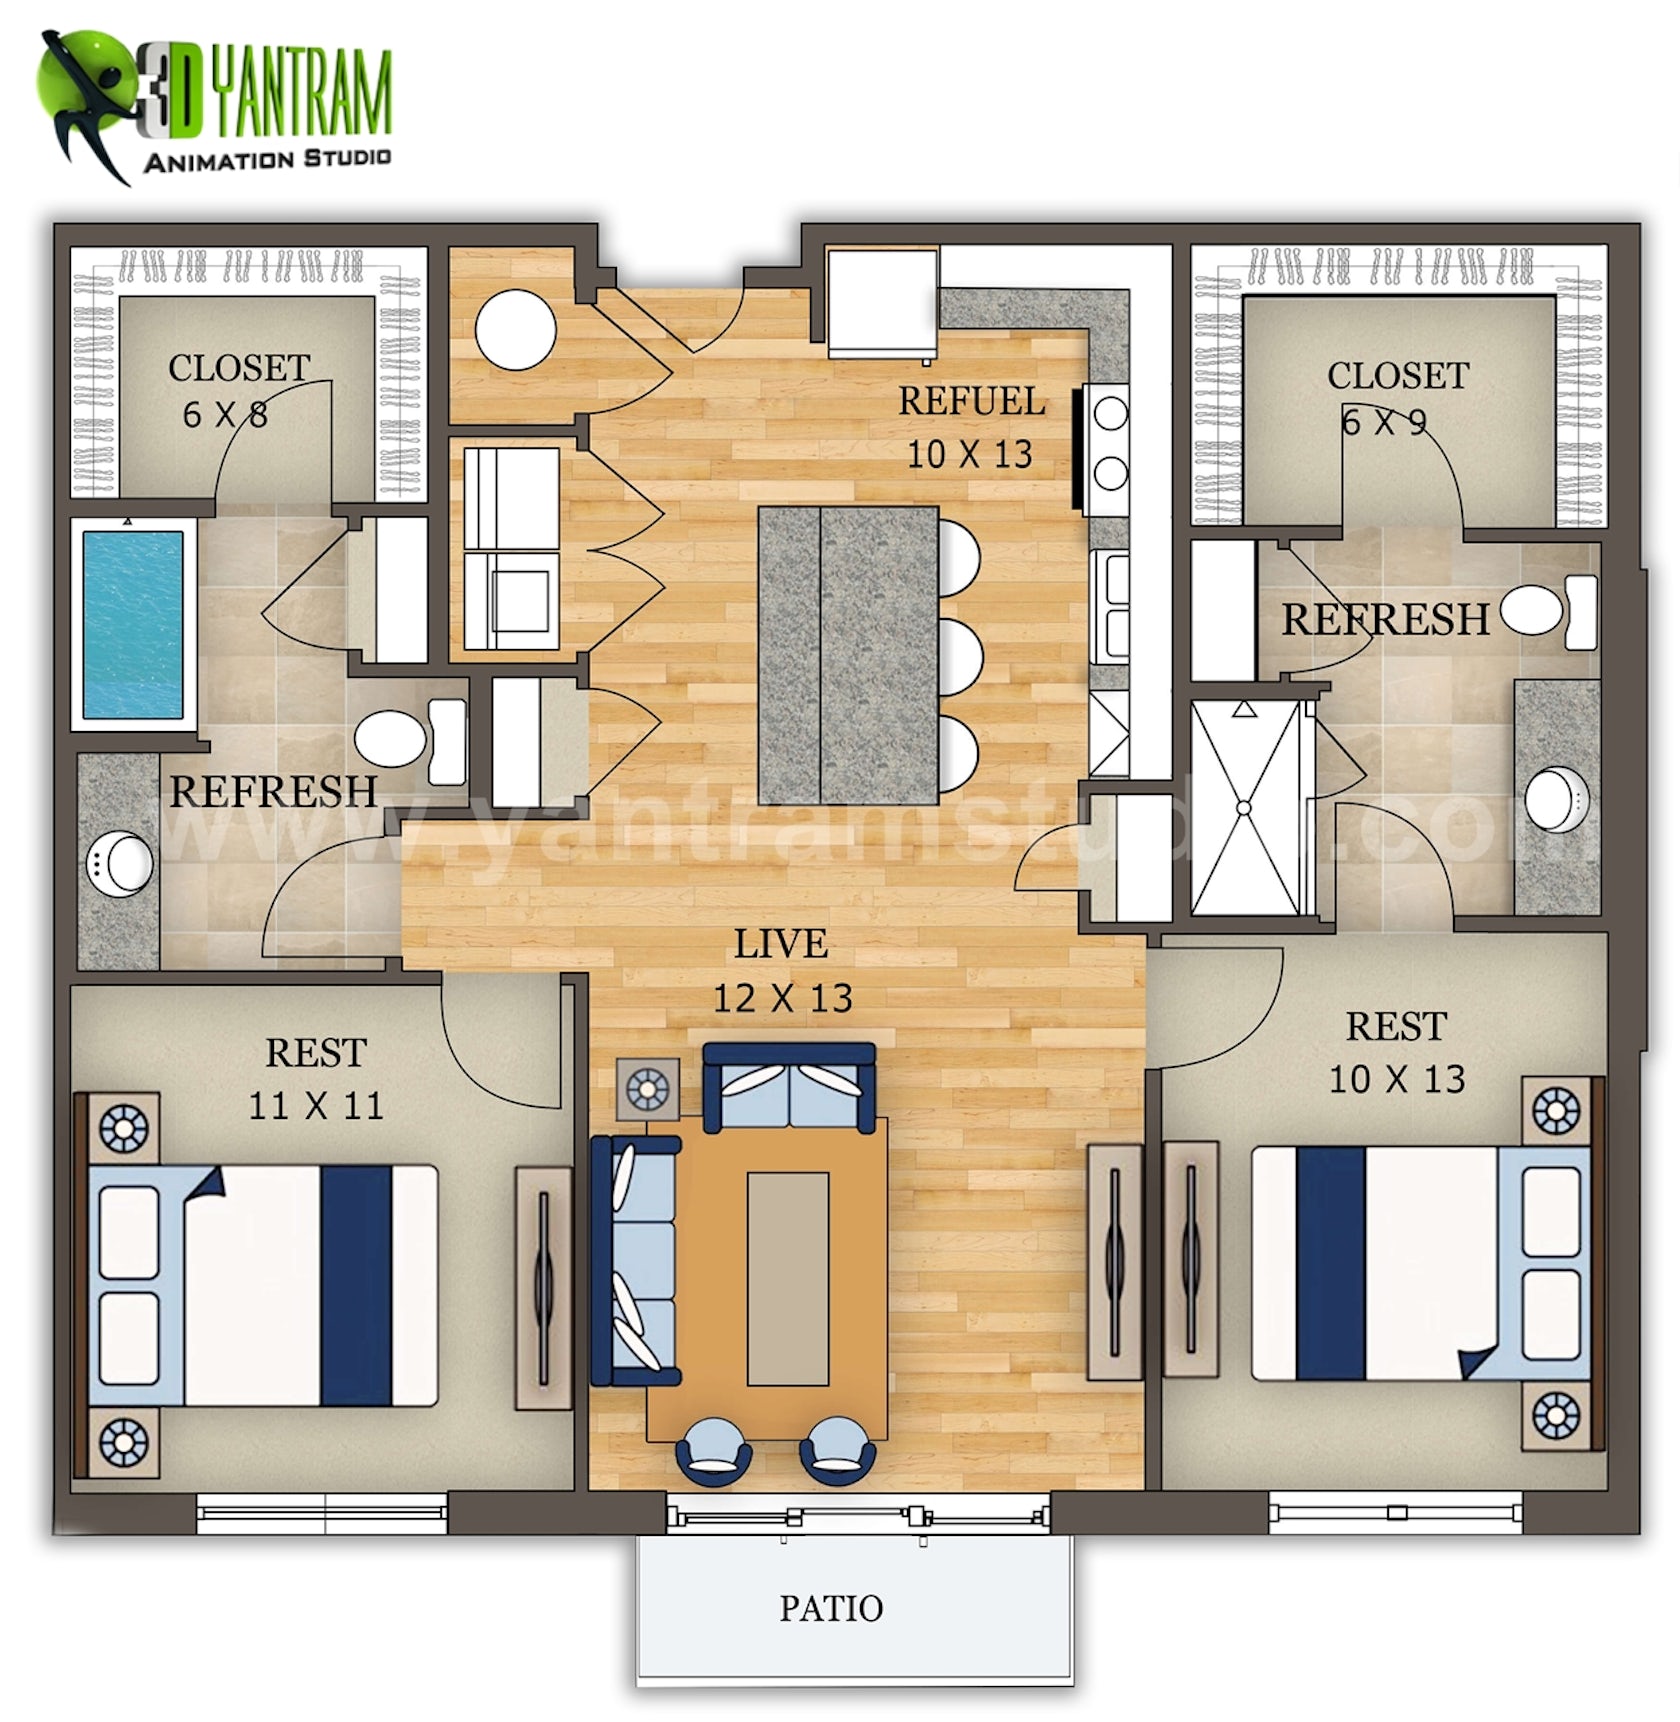 house-floor-plan-design-by-yantram-architectural-visualisation-studio